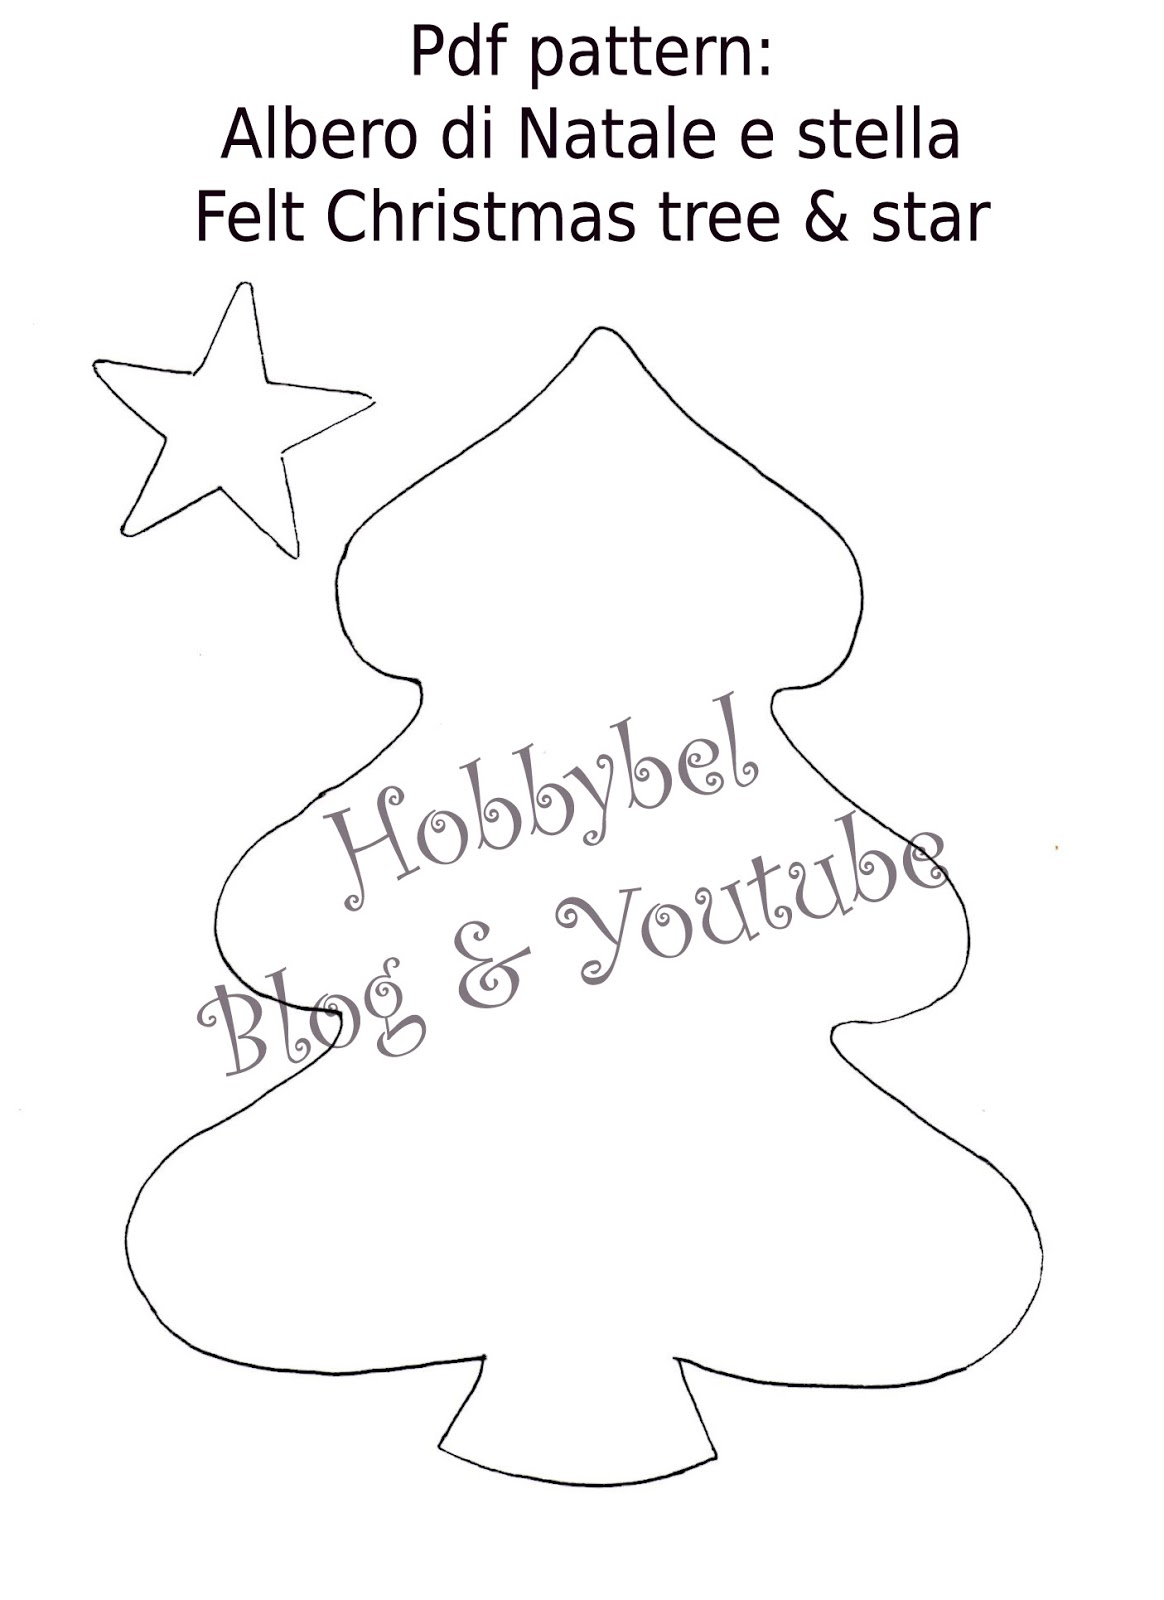 Decorazioni Di Natale Youtube.Hobbybel Blog Youtube Tutorial Decorazioni Di Natale Fai Da Te Diy Christmas Ornaments